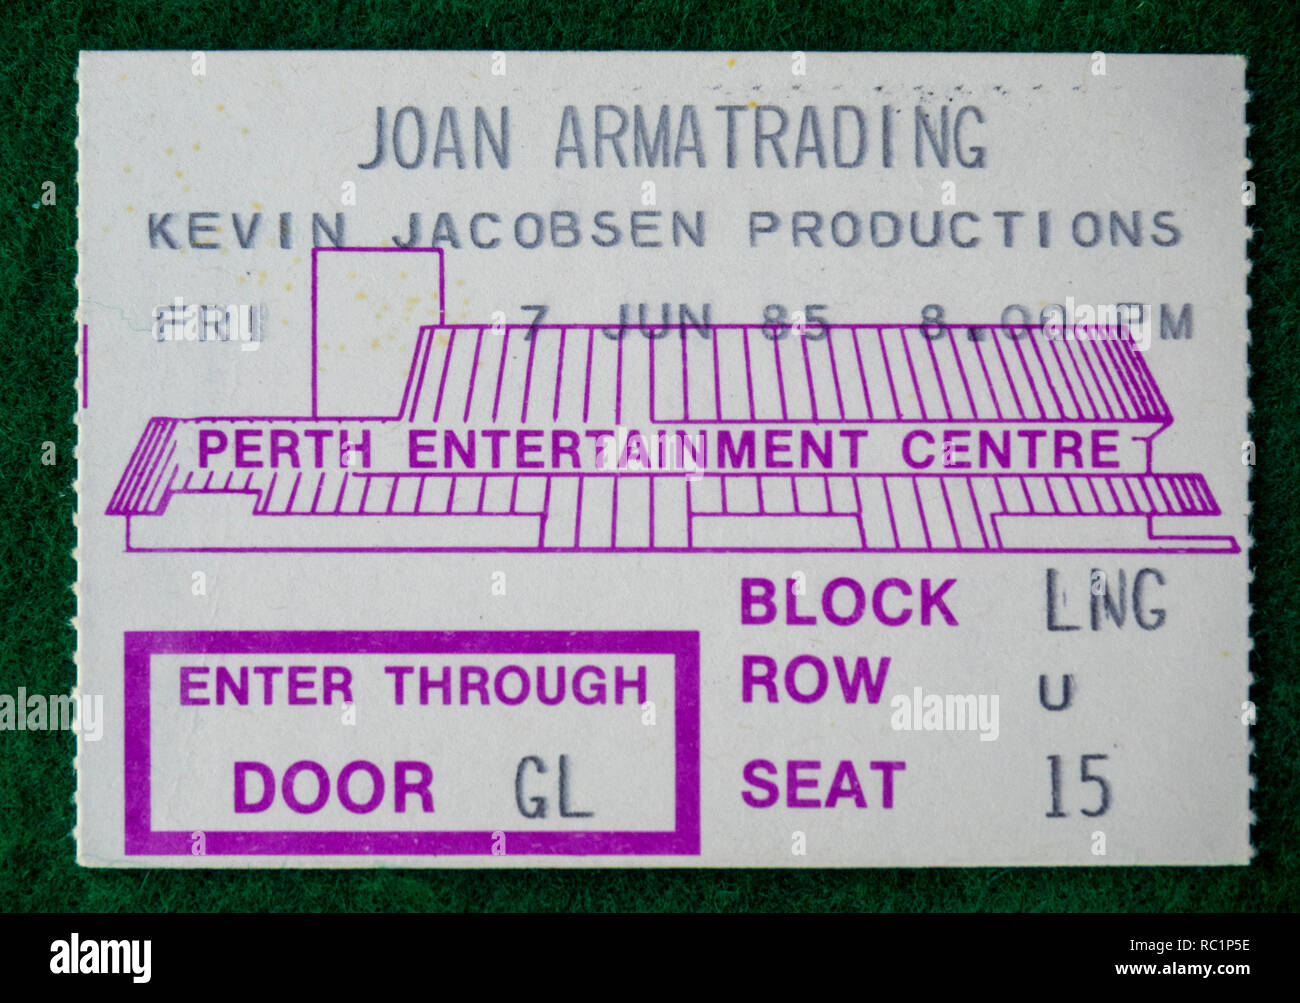 Ticket for Joan Armatrading concert at Perth Entertainment Centre in 1985 WA Australia. Stock Photo